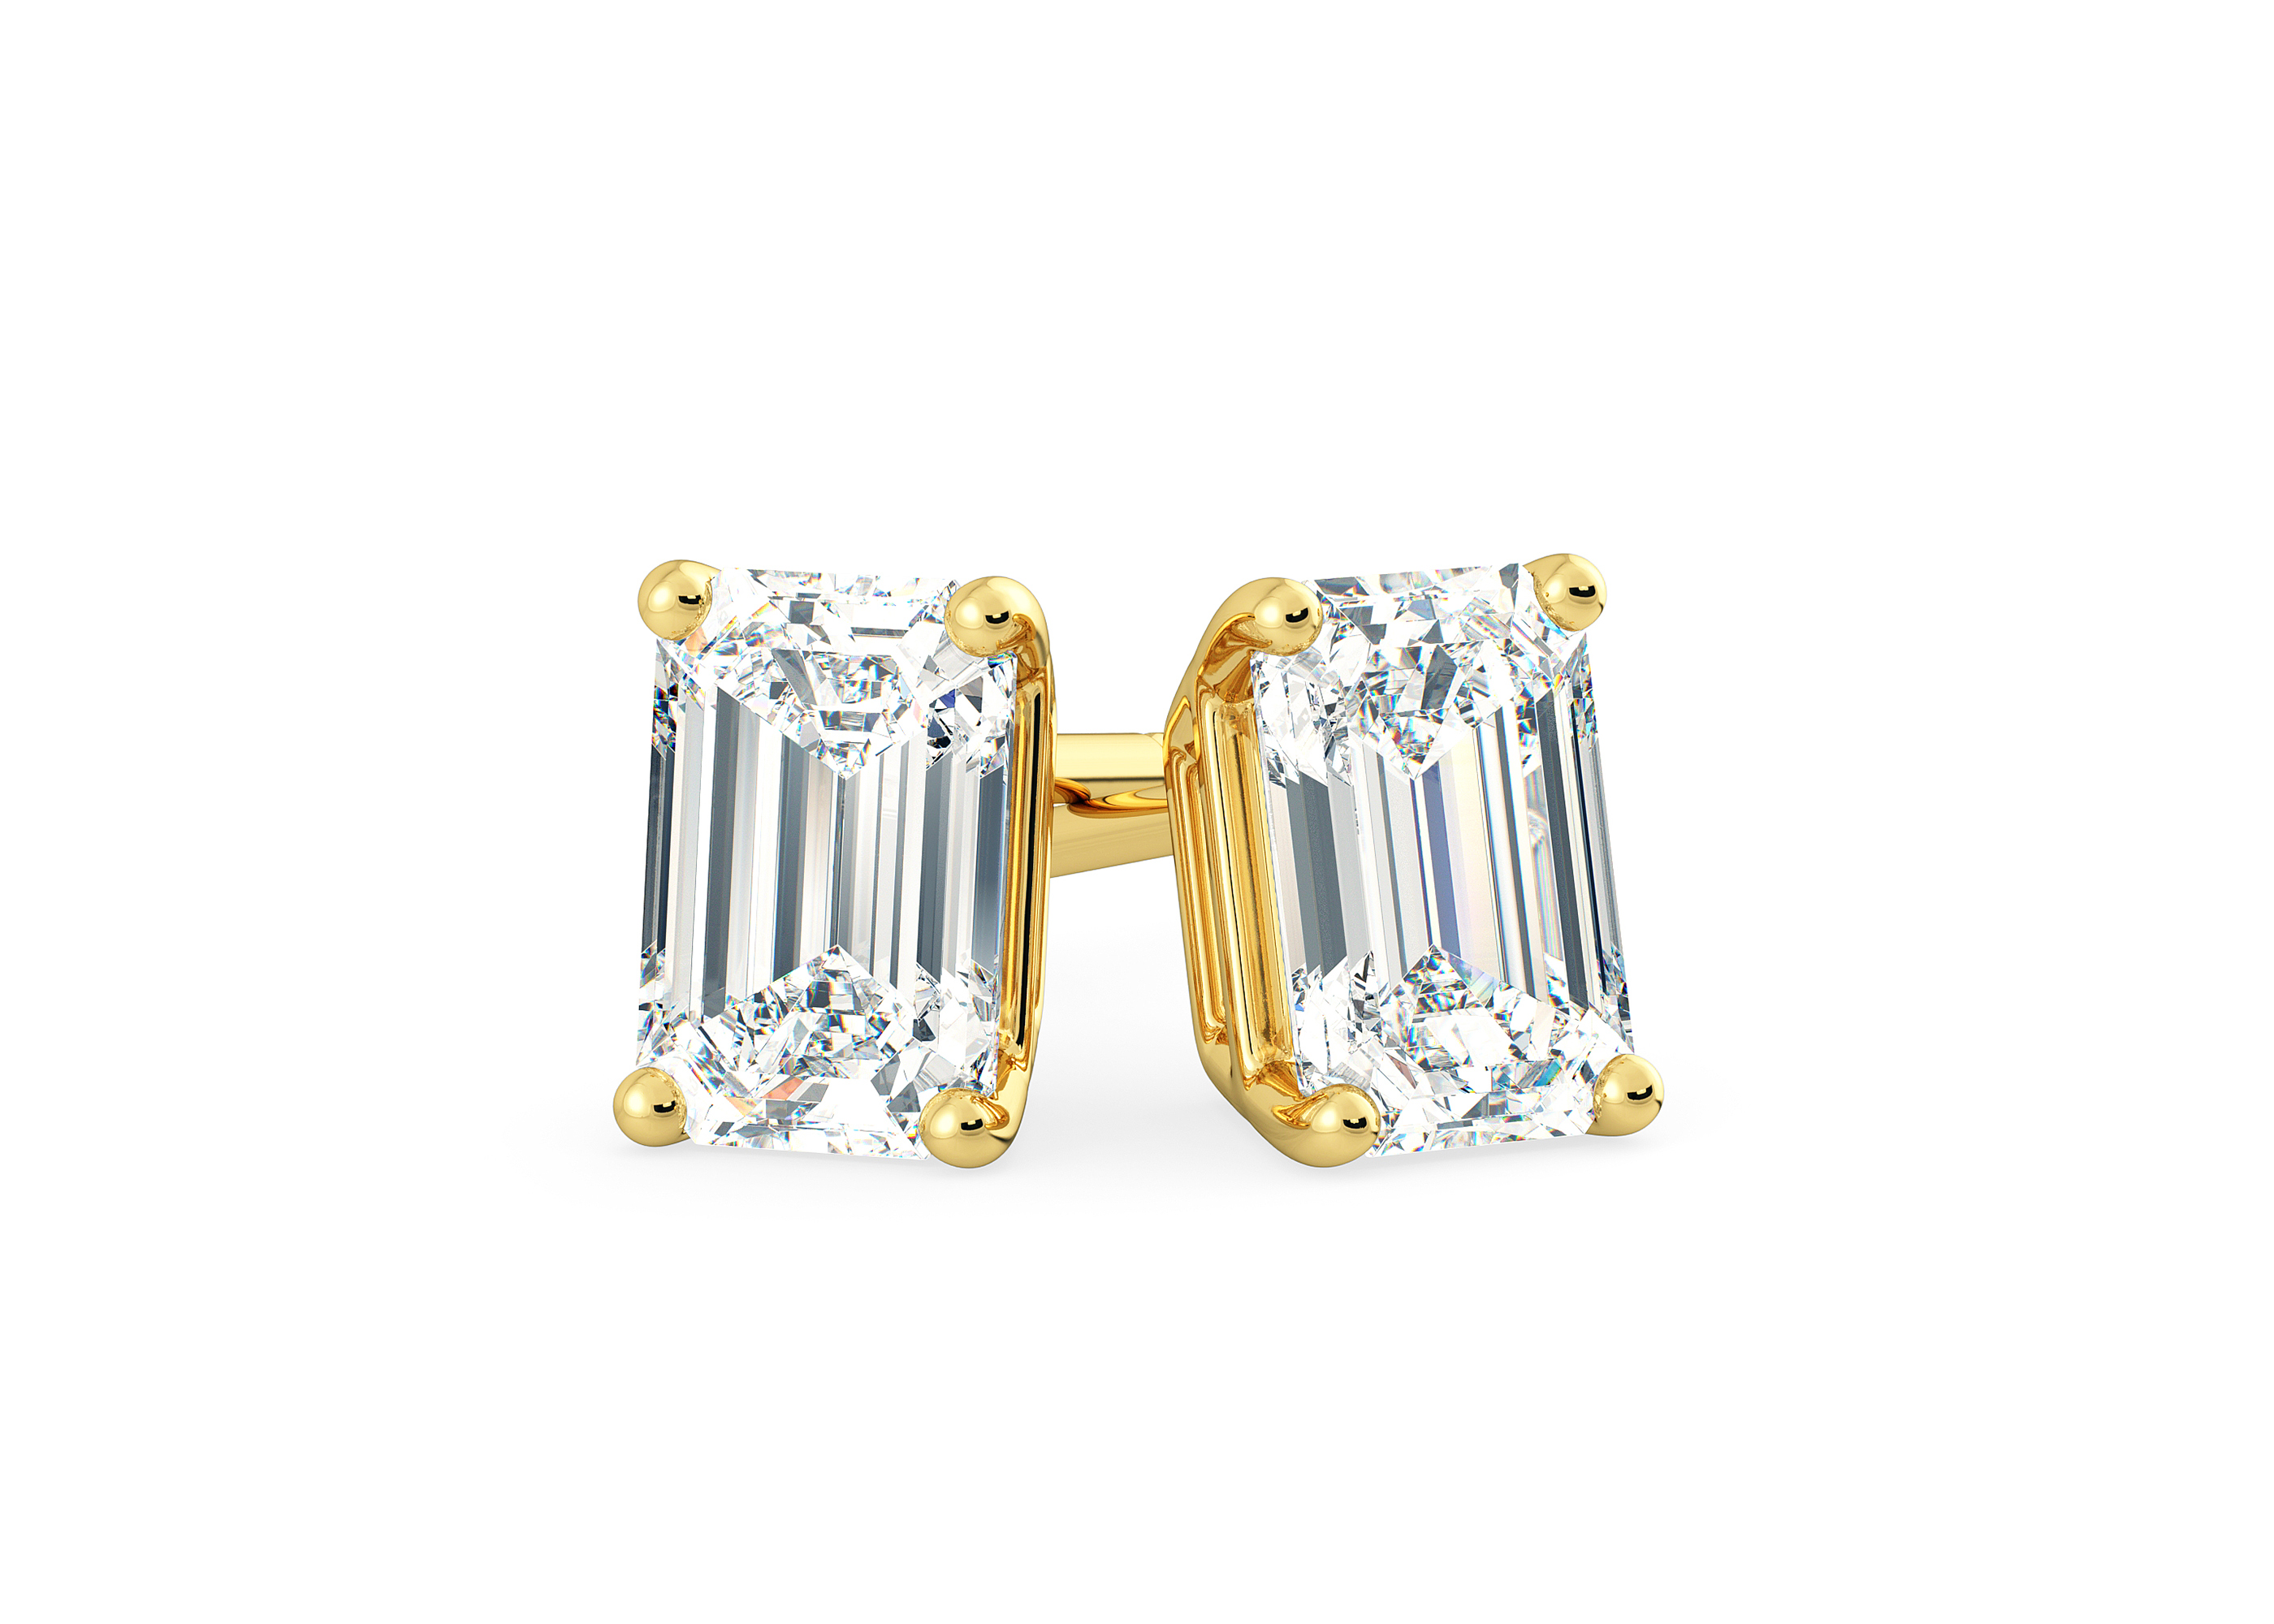 Ettore Emerald Diamond Stud Earrings in 18K Yellow Gold with Screw Backs